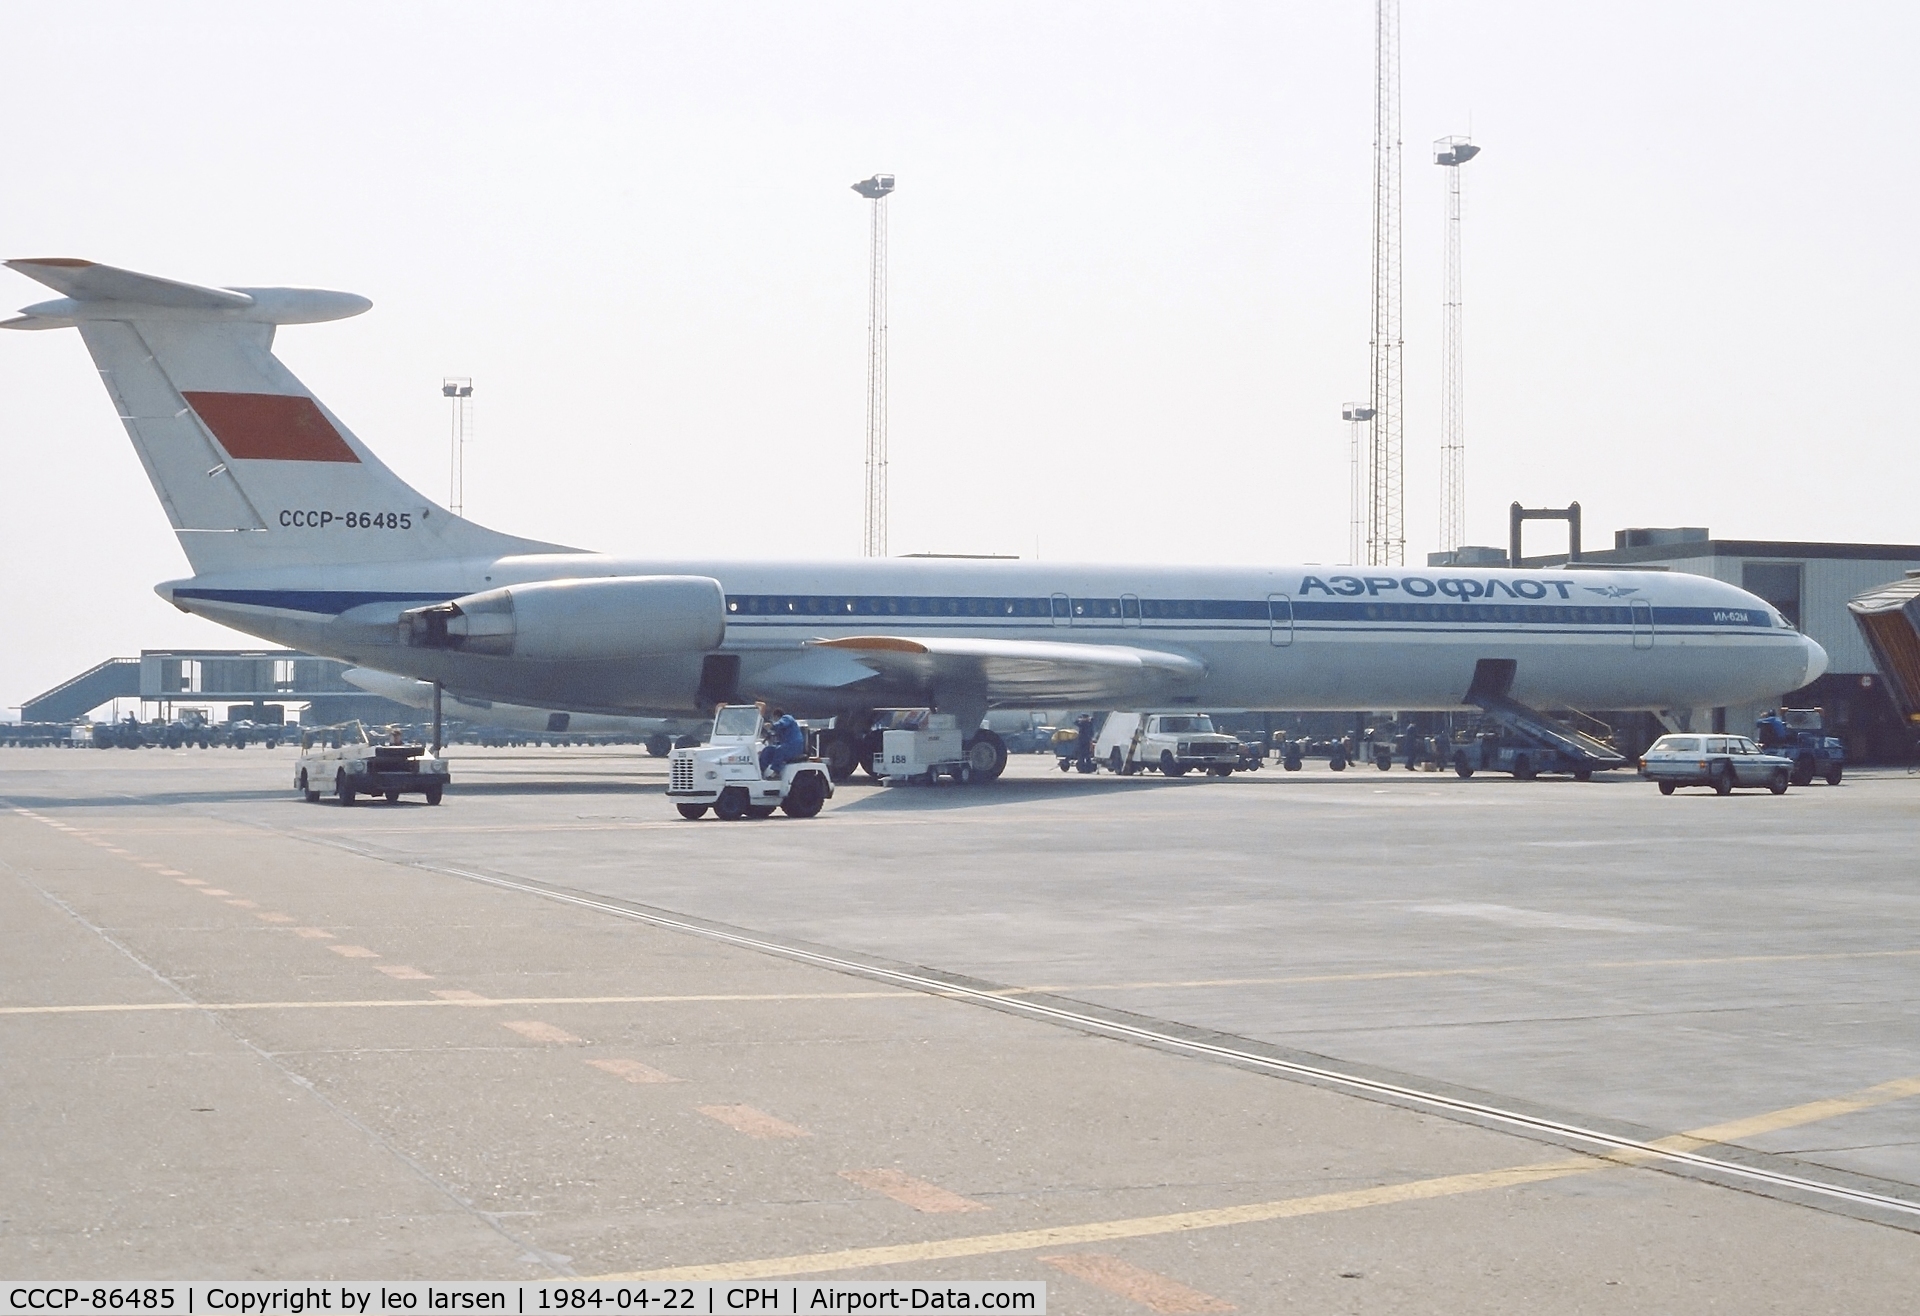 CCCP-86485, 1978 Ilyushin Il-62M C/N 3830912, Copenhagen 22.4.1984